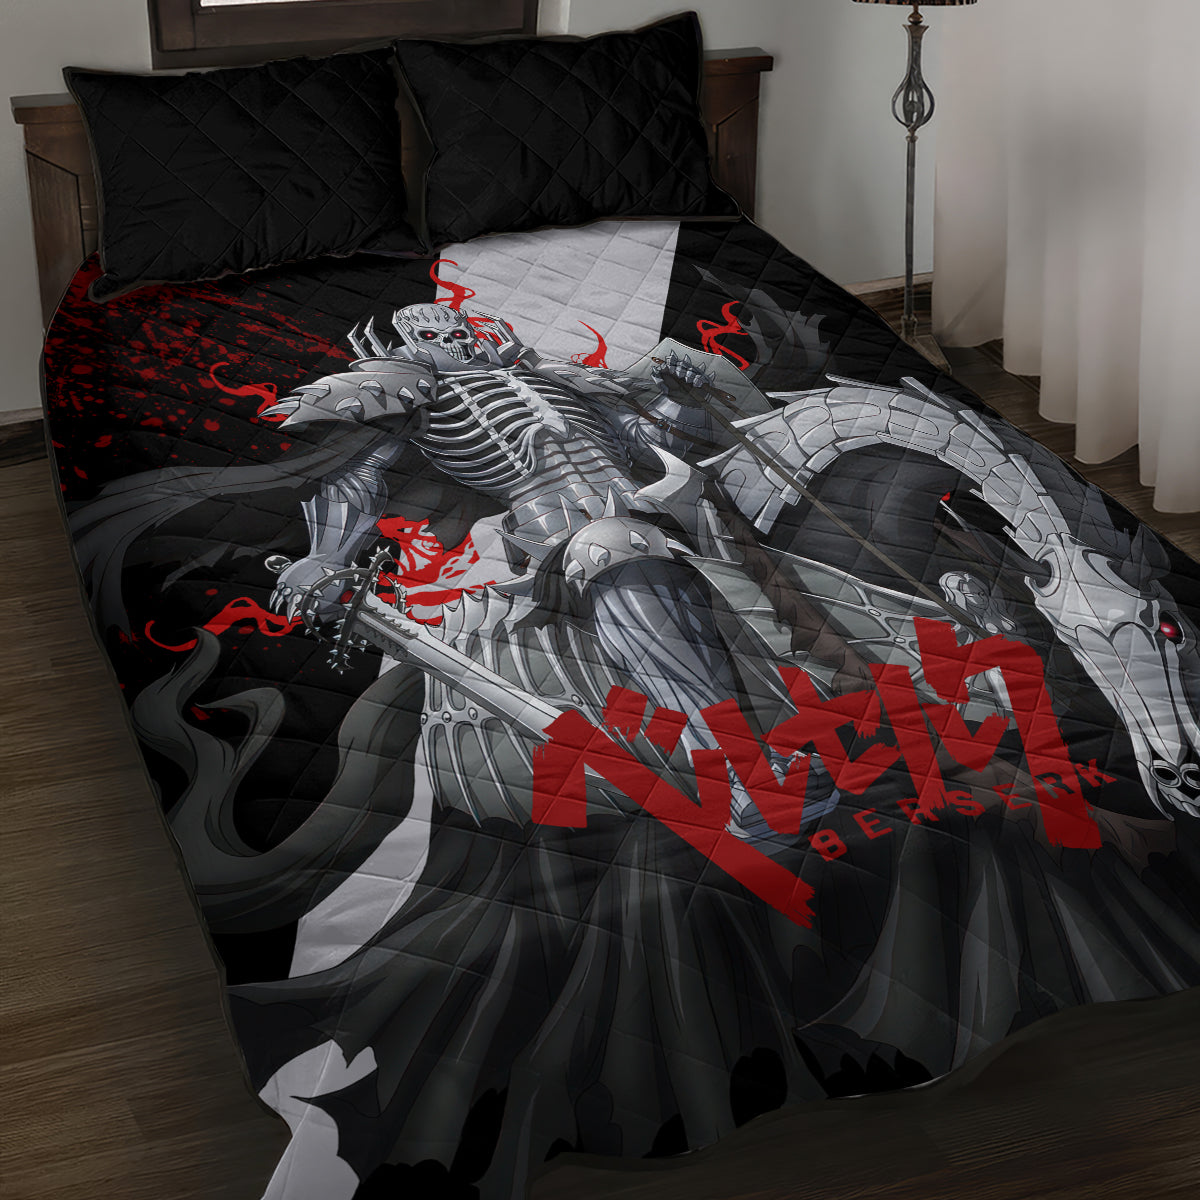 The Skull Knight Berserk Quilt Bed Set Black Blood Style